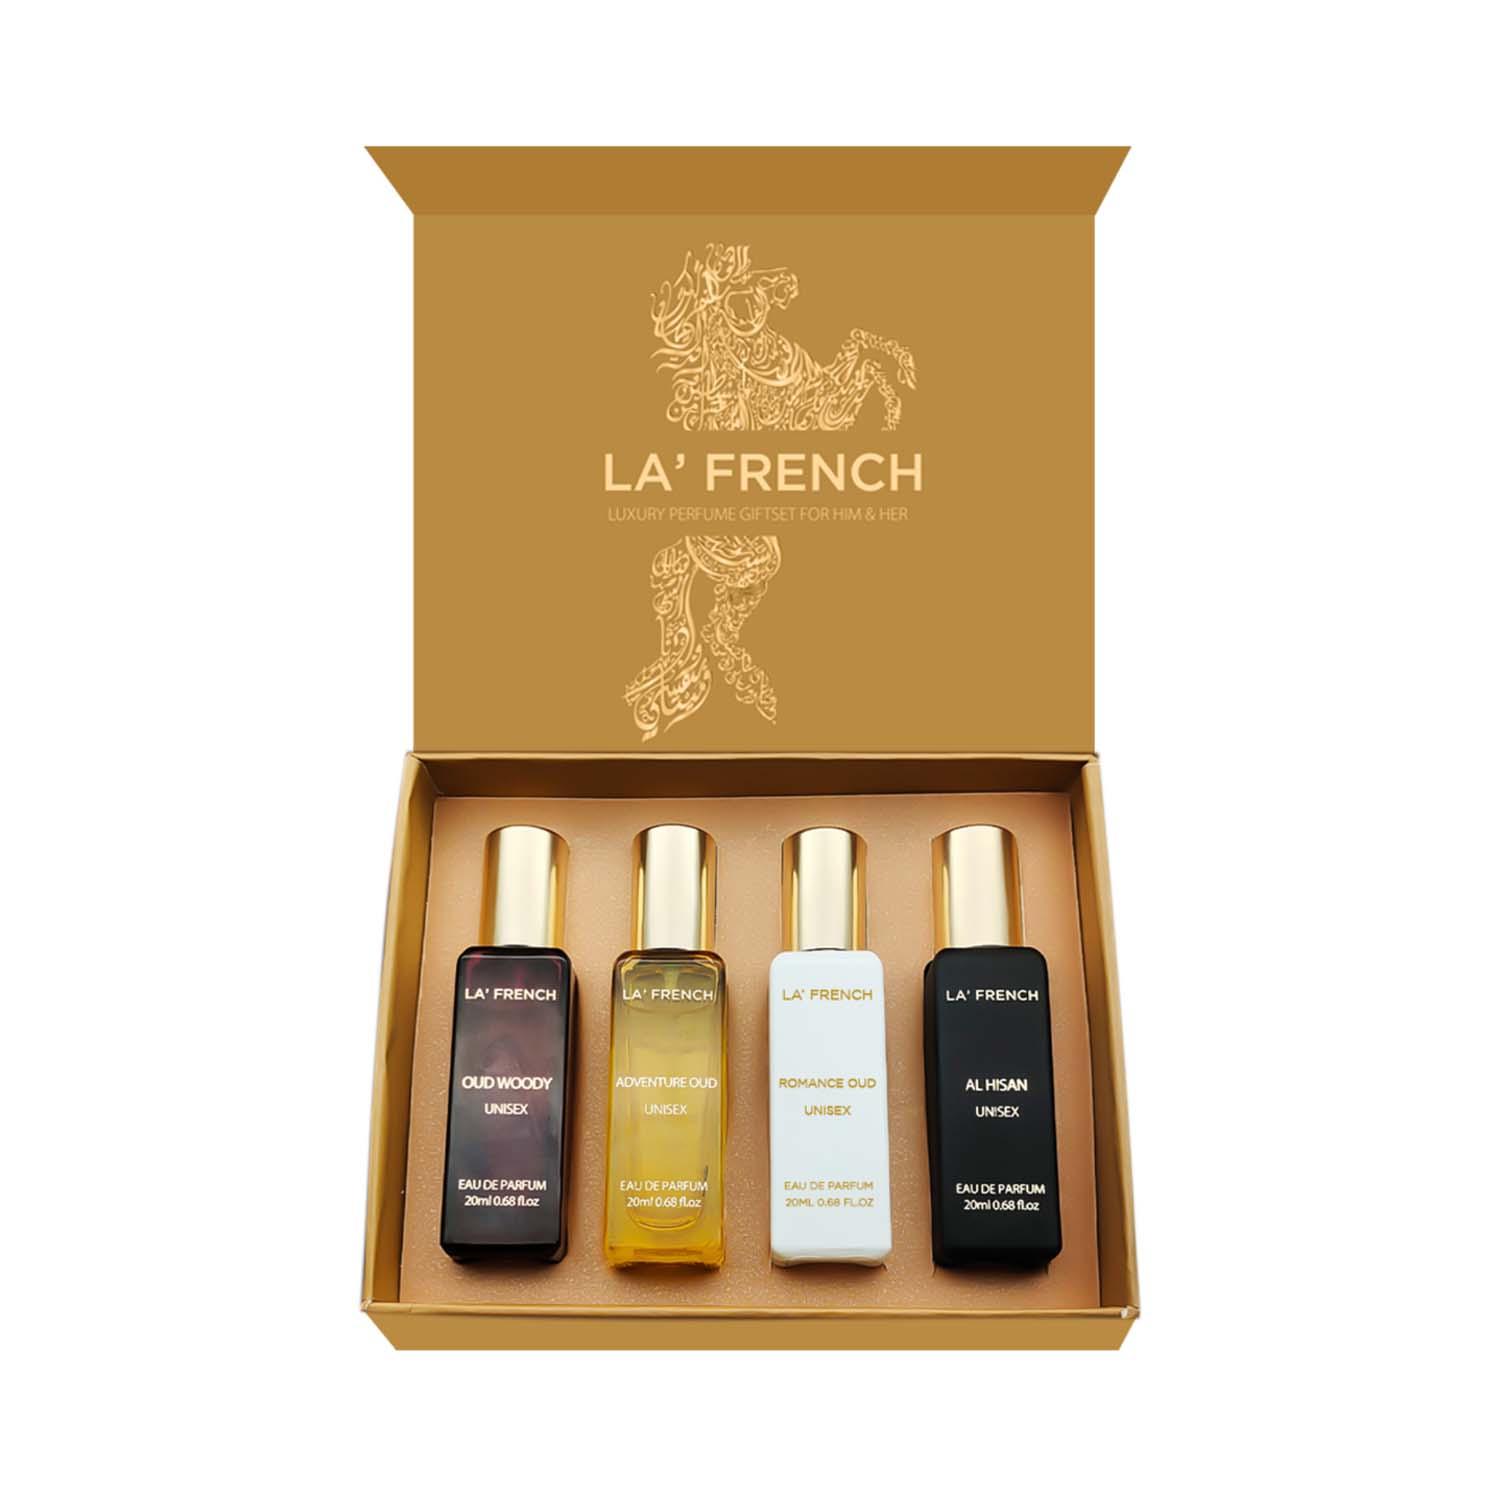 LA' French | LA' French Adventure Oud, Romance Oud, Al Hisan, Oud Woody Luxury Perfume Gift Set For Unisex (4Pcs)